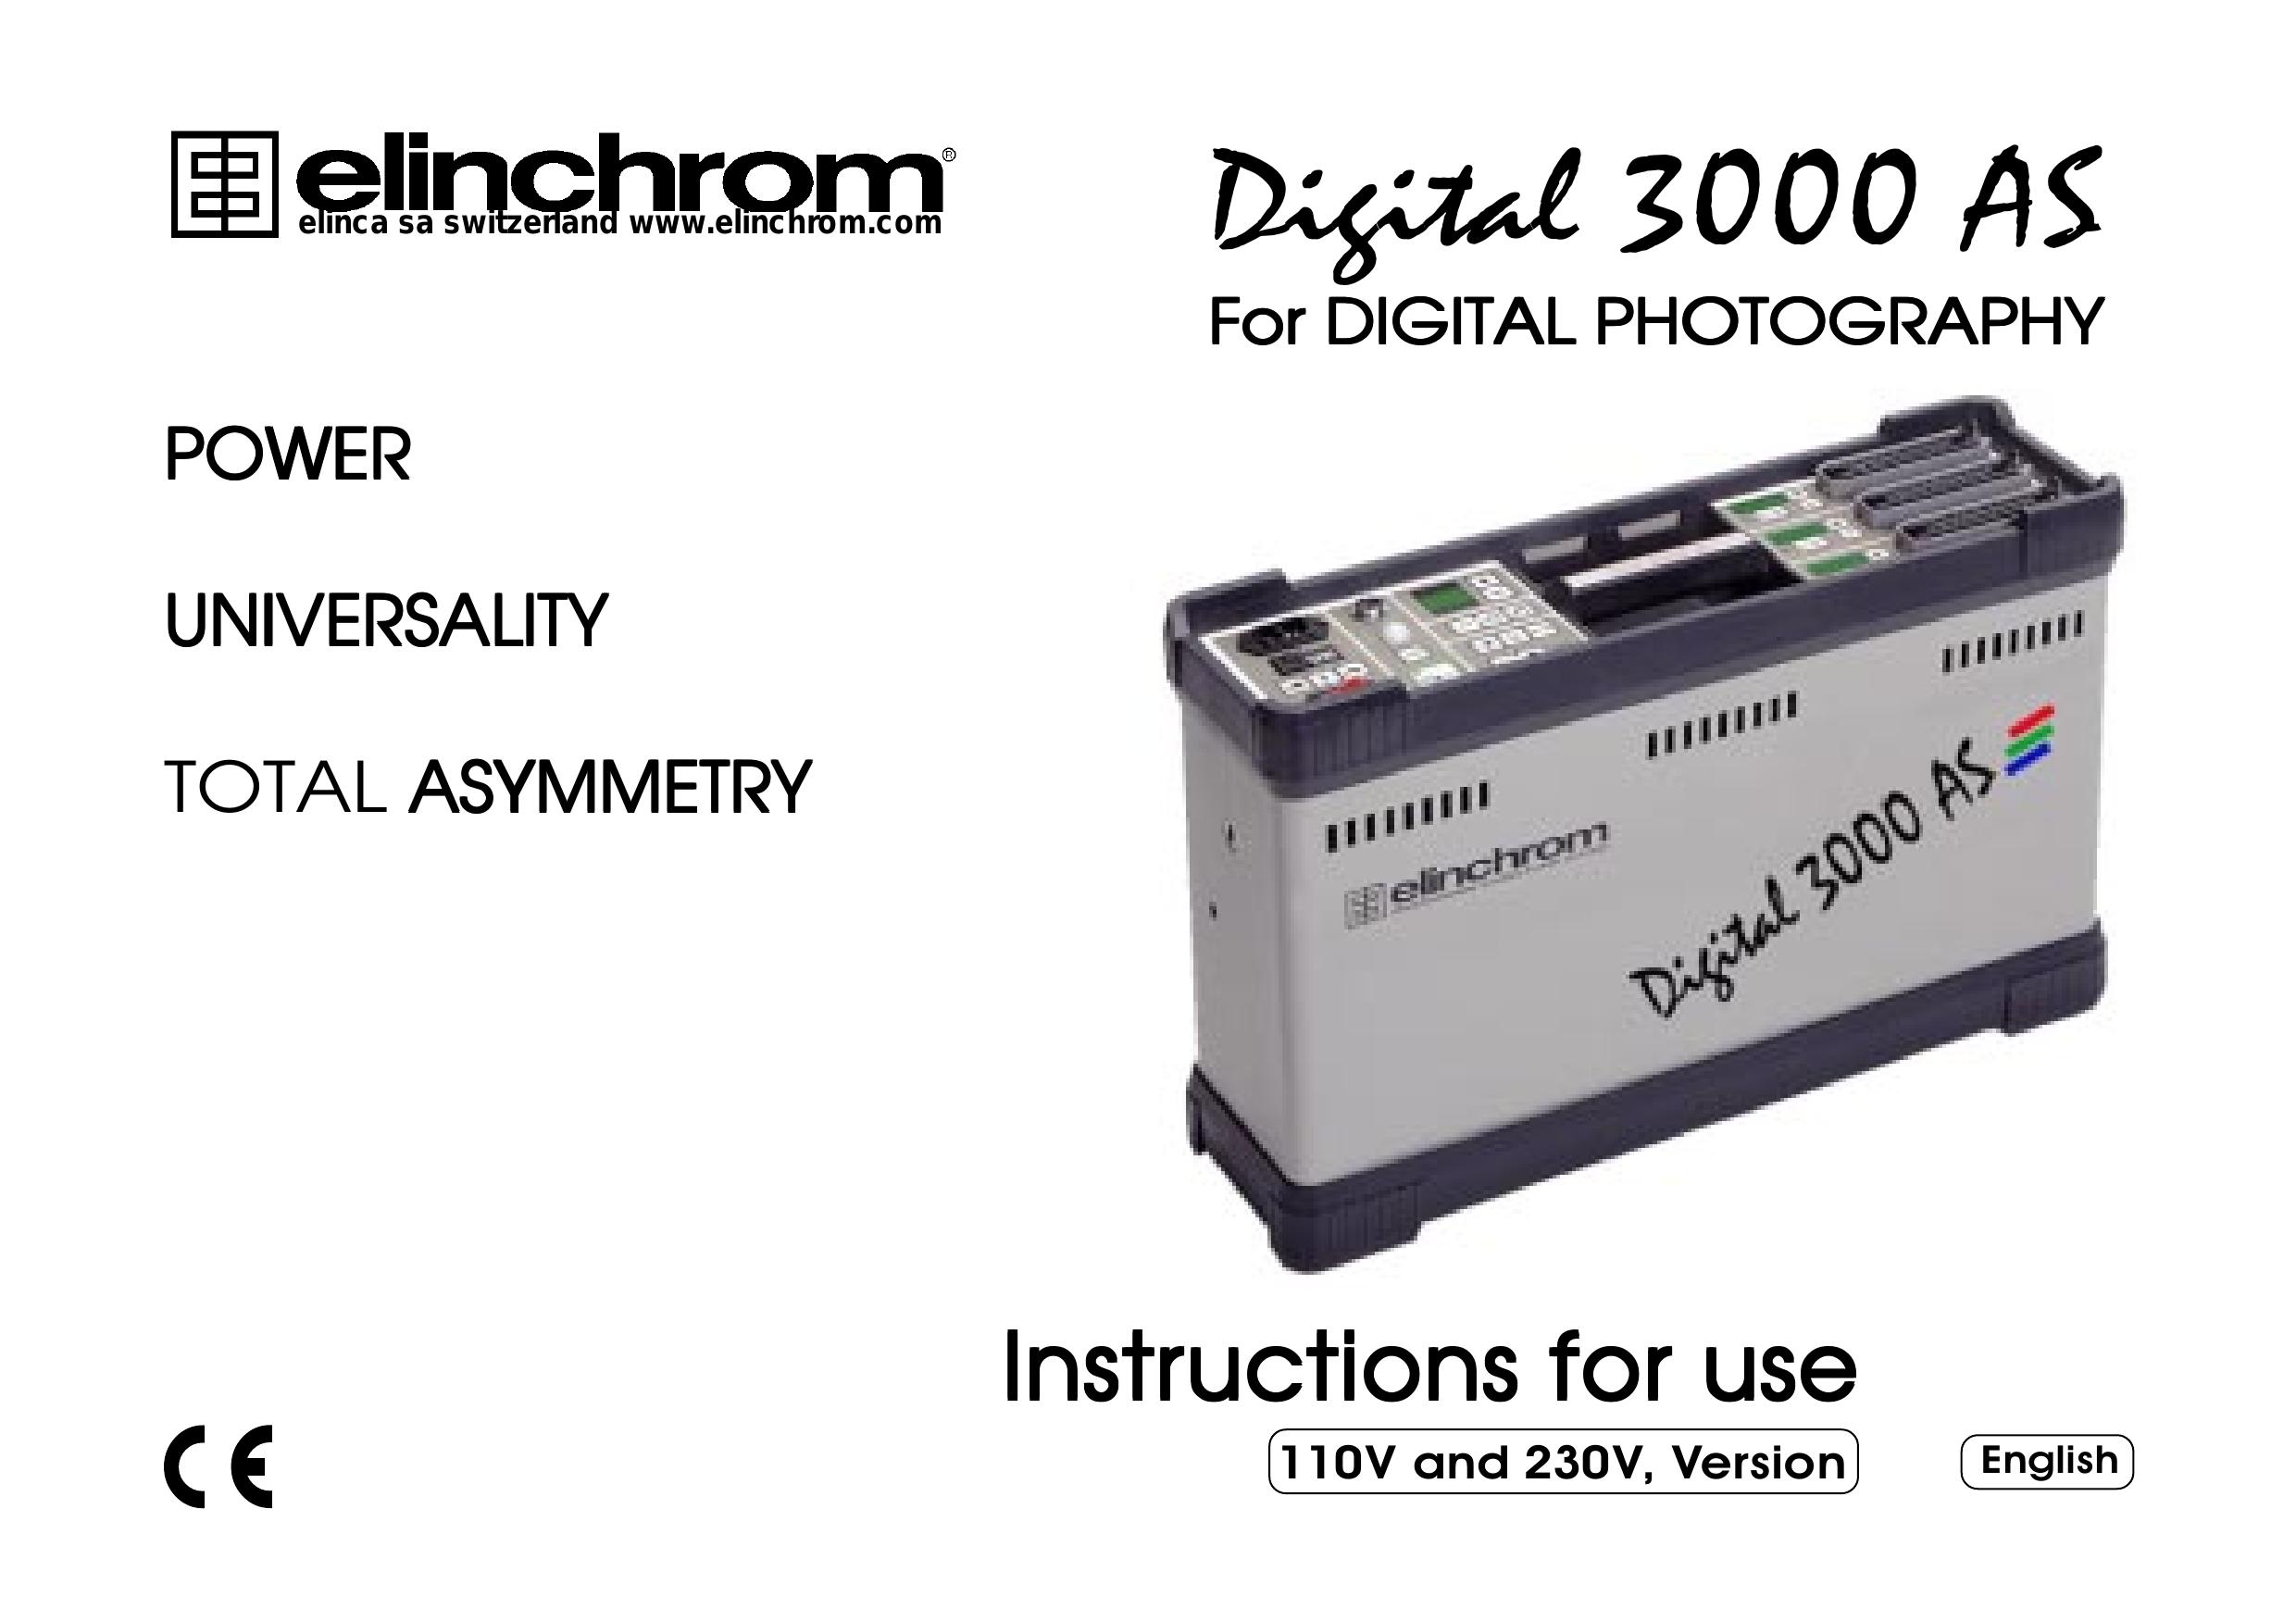 Elinchrom Digital 3000 AS Camcorder User Manual